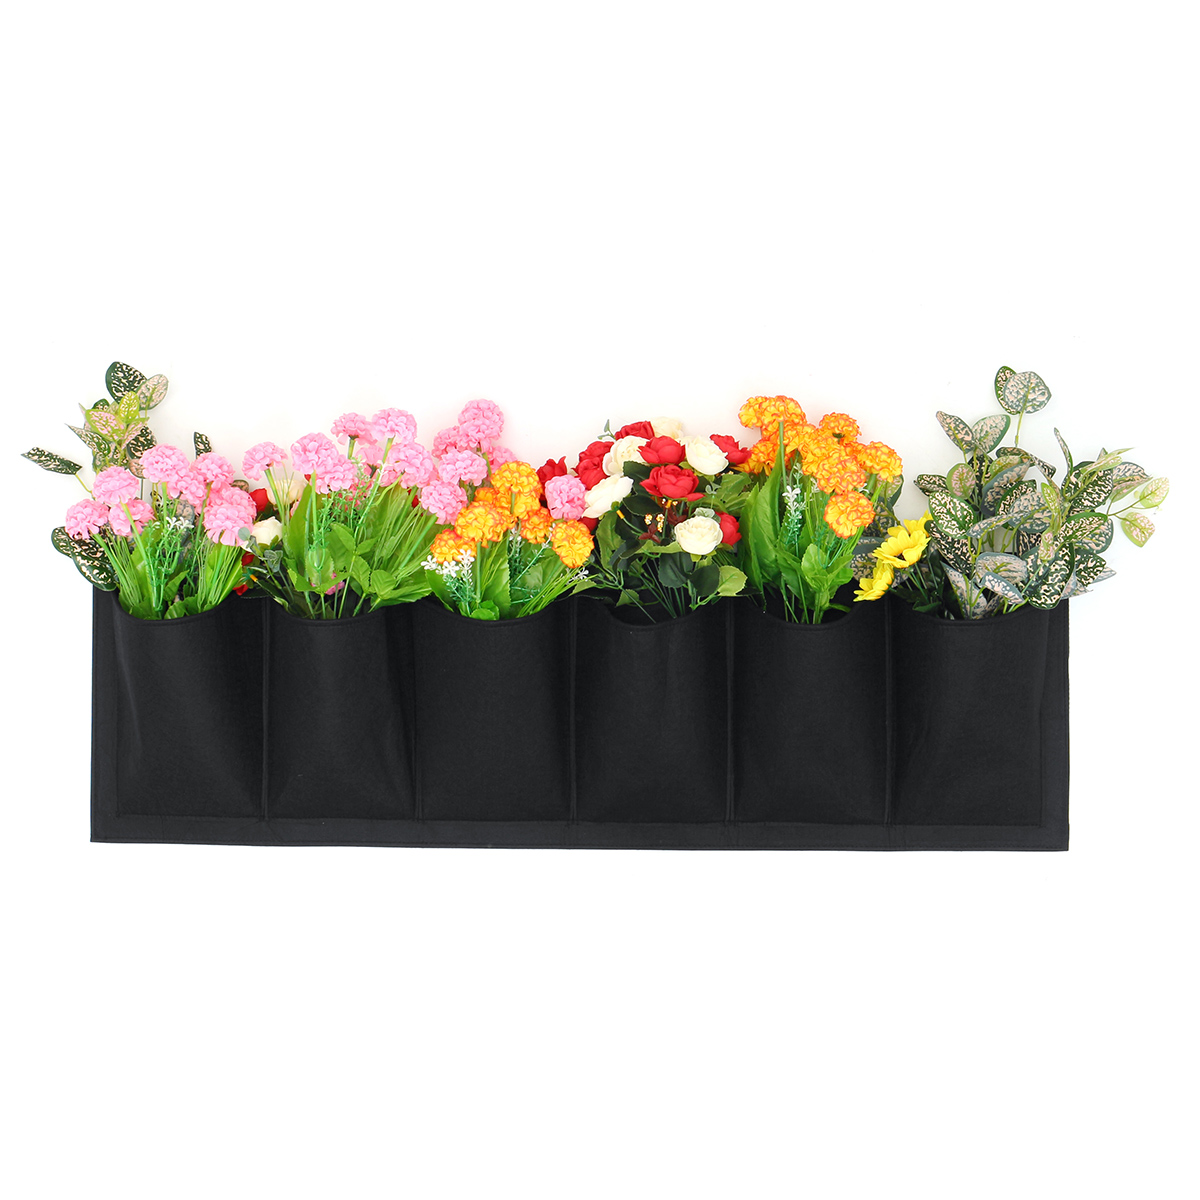 6-Pocket-Vertical-Garden-Plant-Grow-Wall-Bags-Planter-Flower-Fabric-Pot-Indoor-Hanging-Black-Tools-H-1786431-5